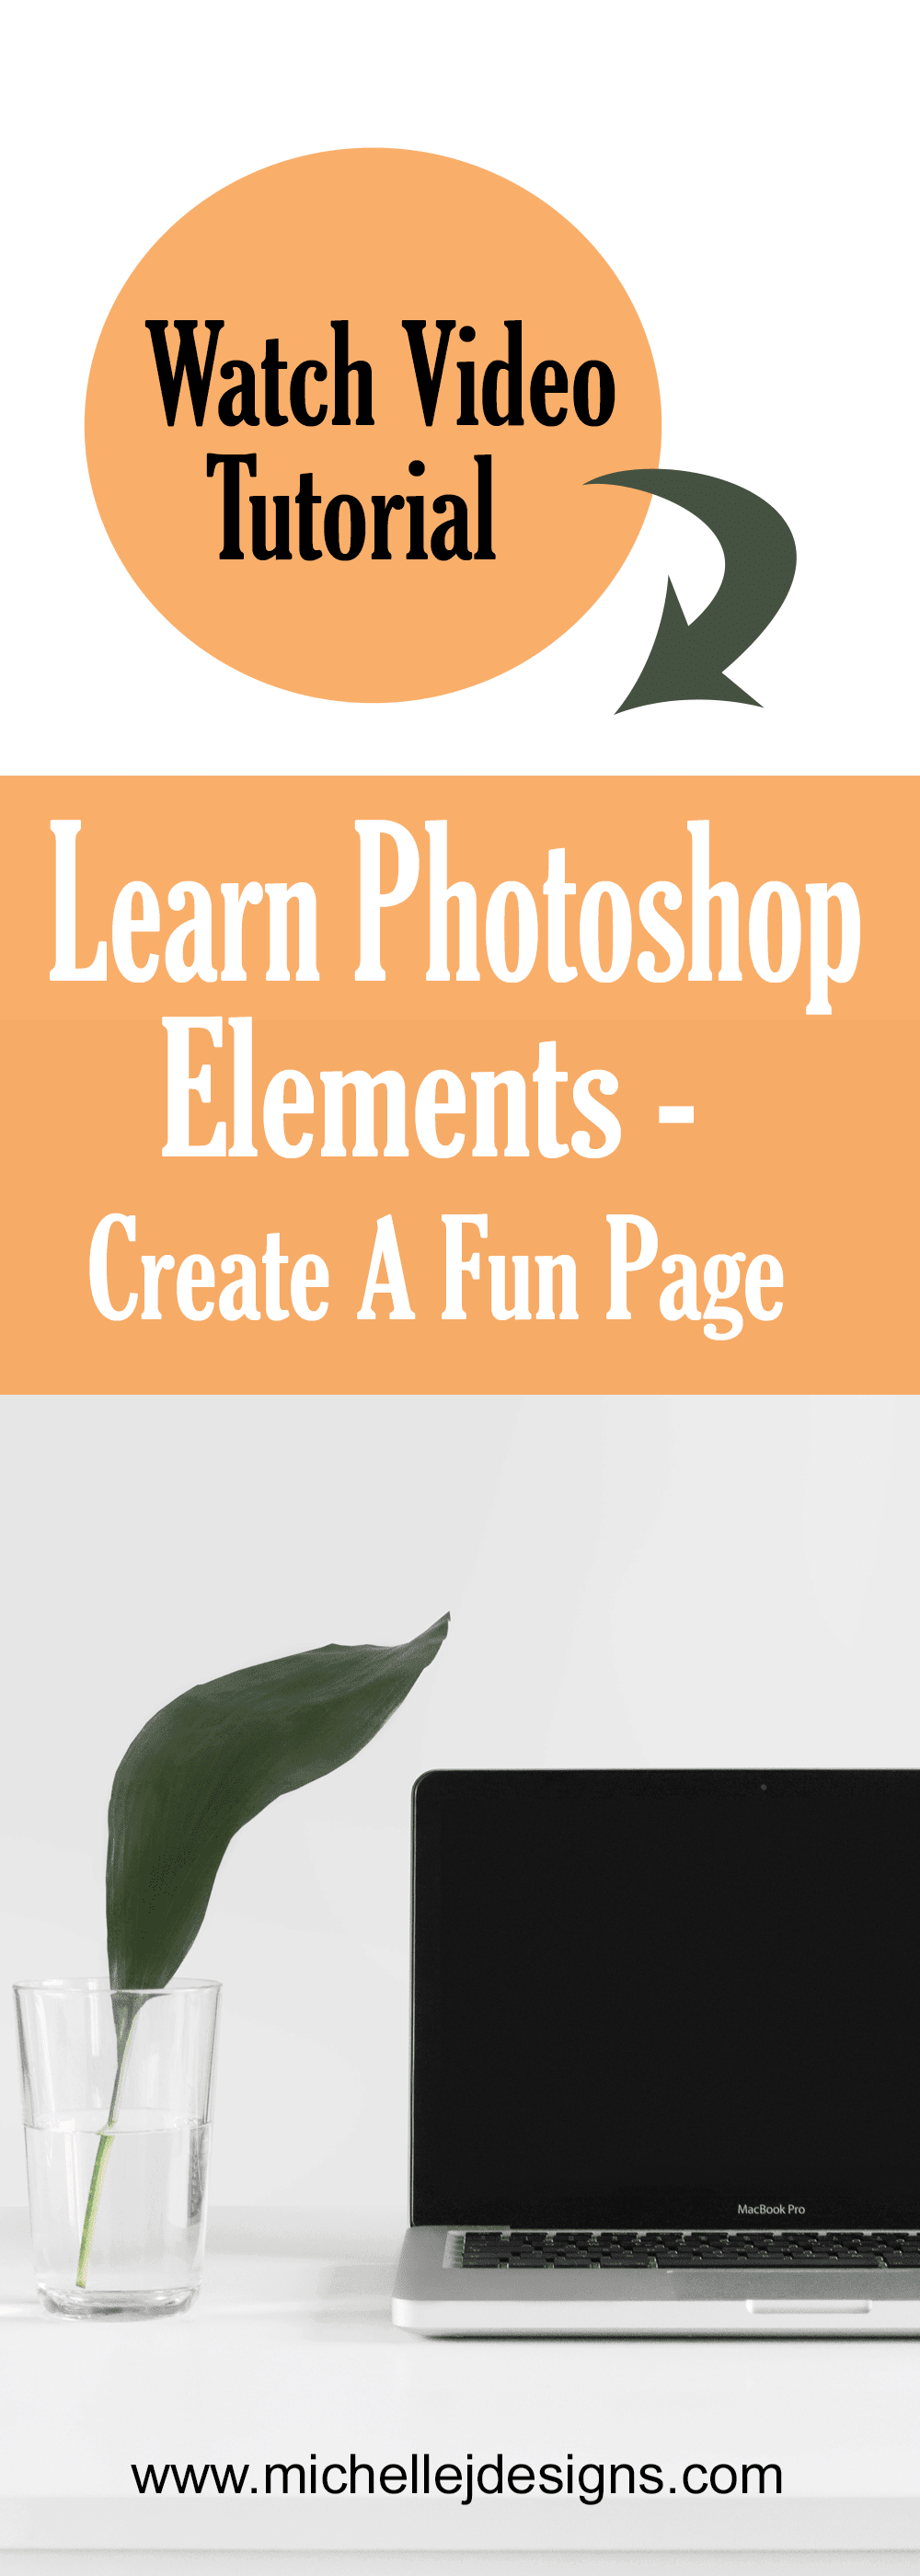 Learn Photoshop Elements, Photoshop Elements Tutorial, Basic Photoshop Elements Tutorial, Photoshop Elements Video Tutorial #photoshopelements #learnphotoshopelements #pse #adobephotoshopelelments - www.michellejdesigns.com